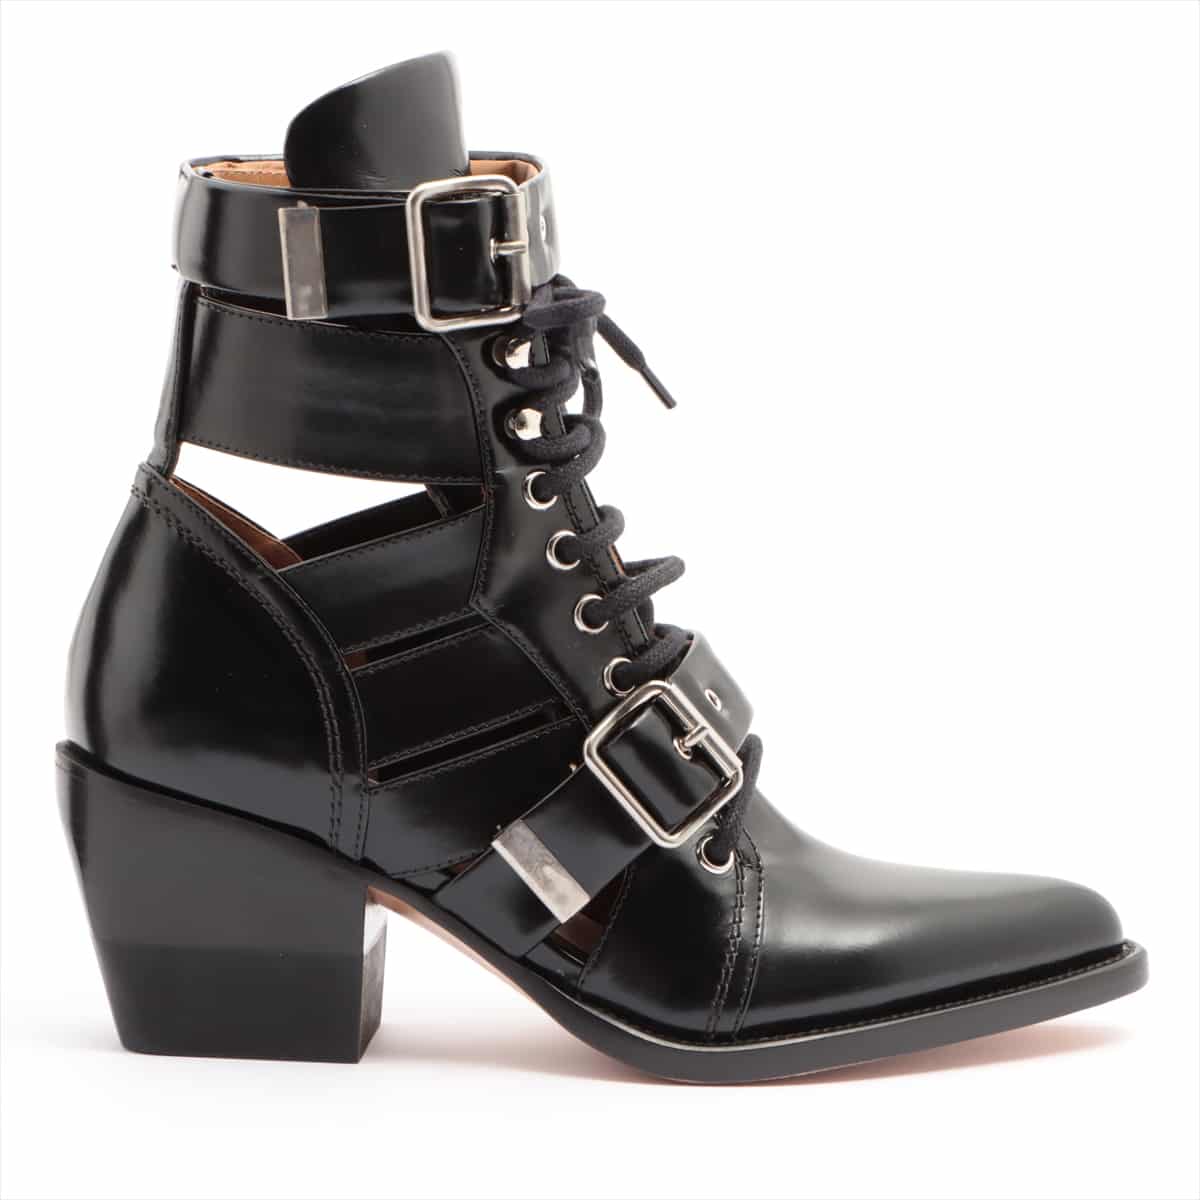 Chloe Leather Boots 37.5 Ladies' Black